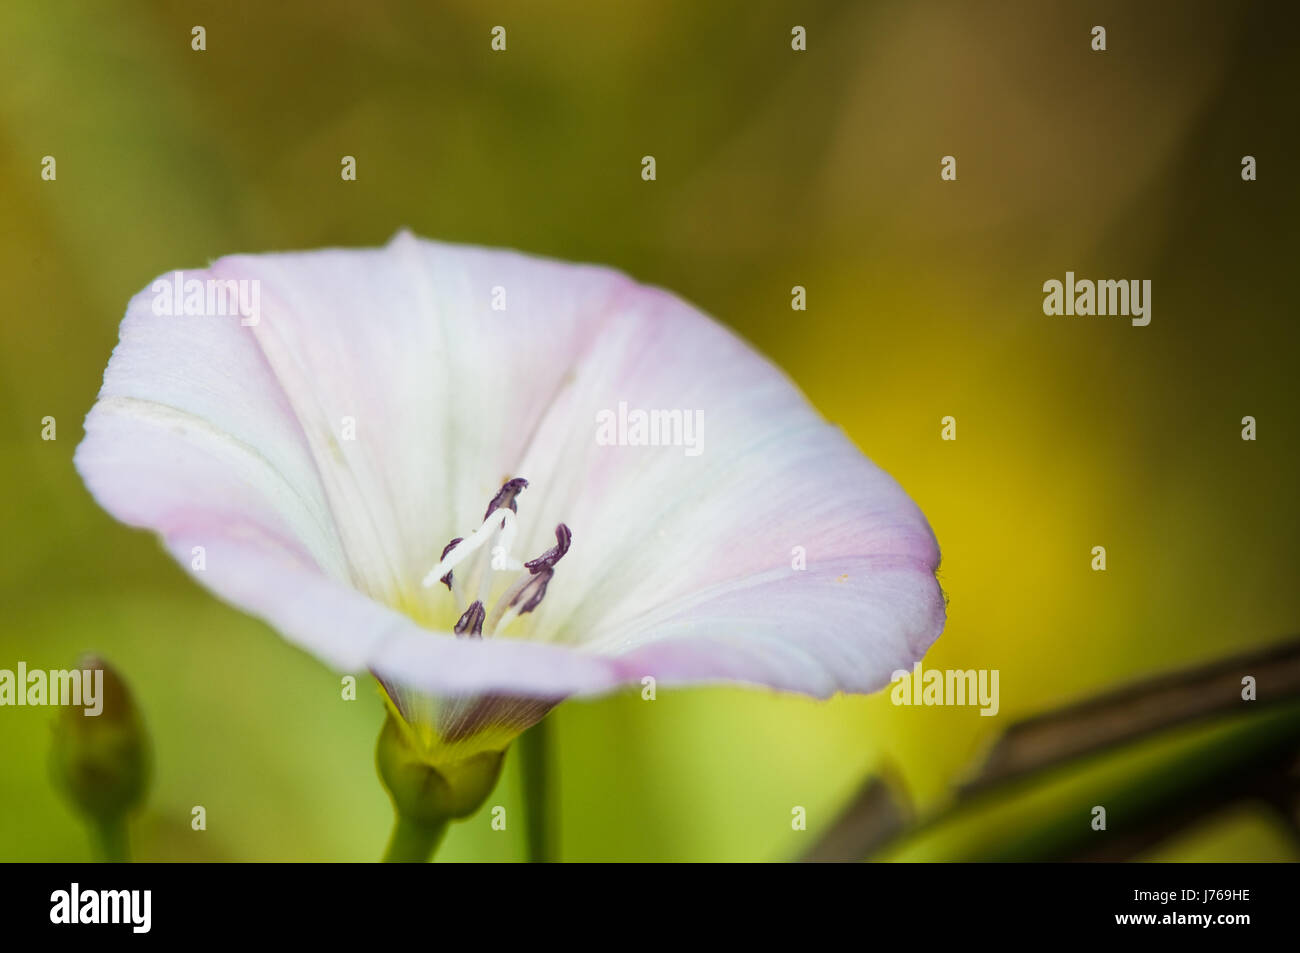 flower plant bloom blossom flourish flourishing blank european caucasian bud Stock Photo